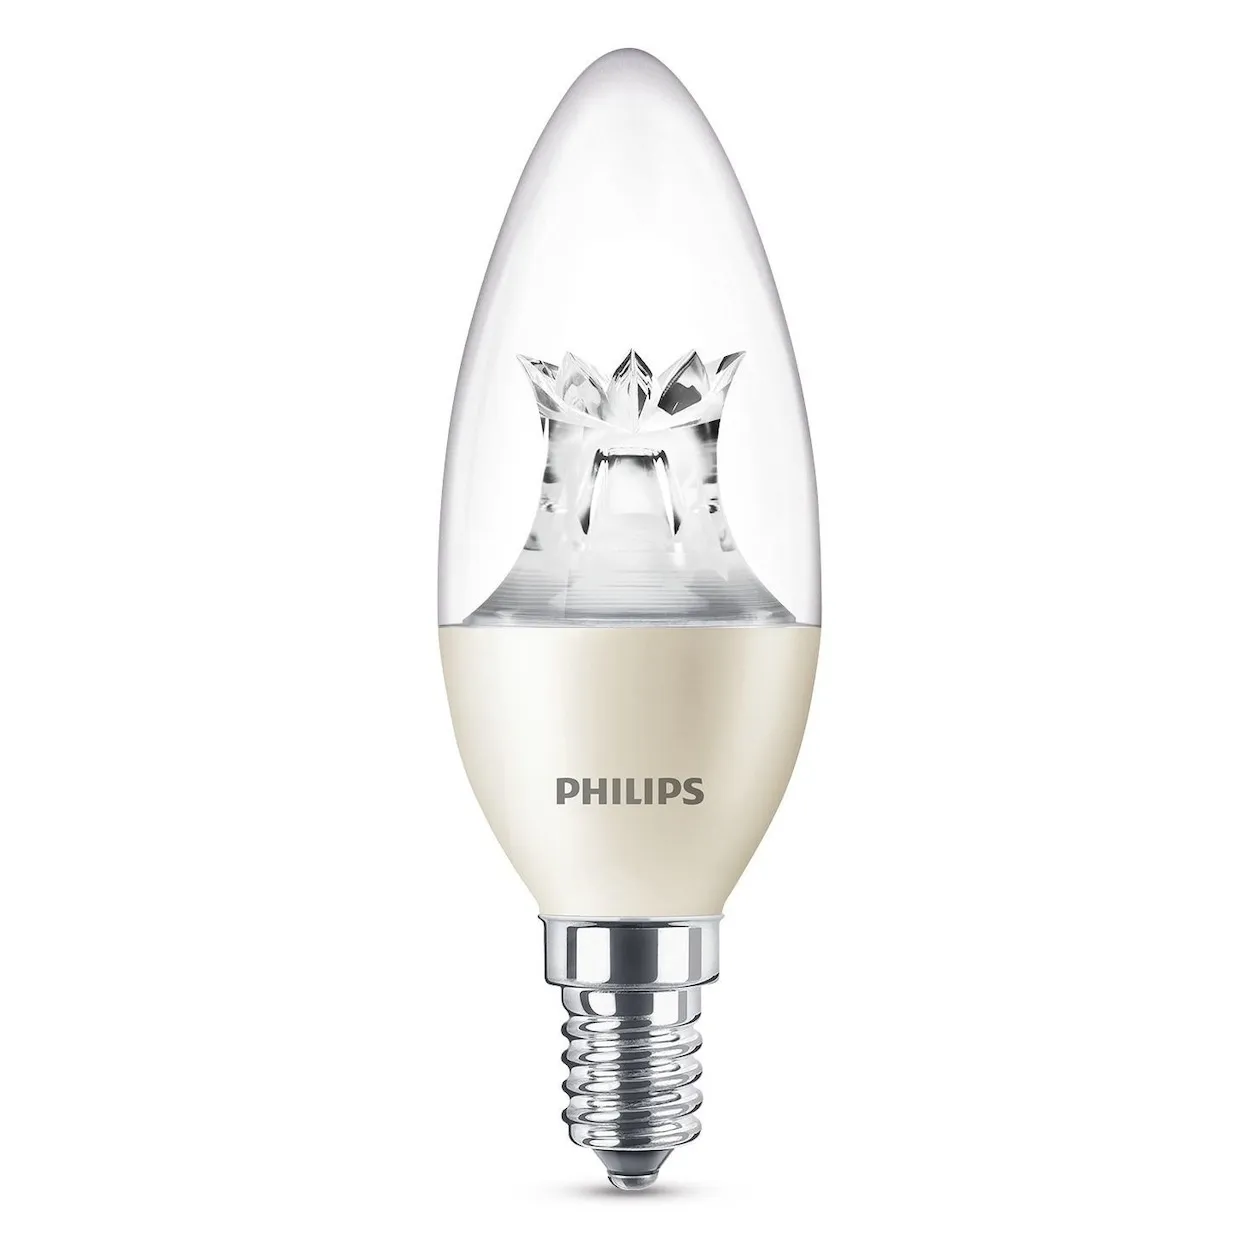 Philips LED lamp E14 4W 250Lm kaars helder dimbaar